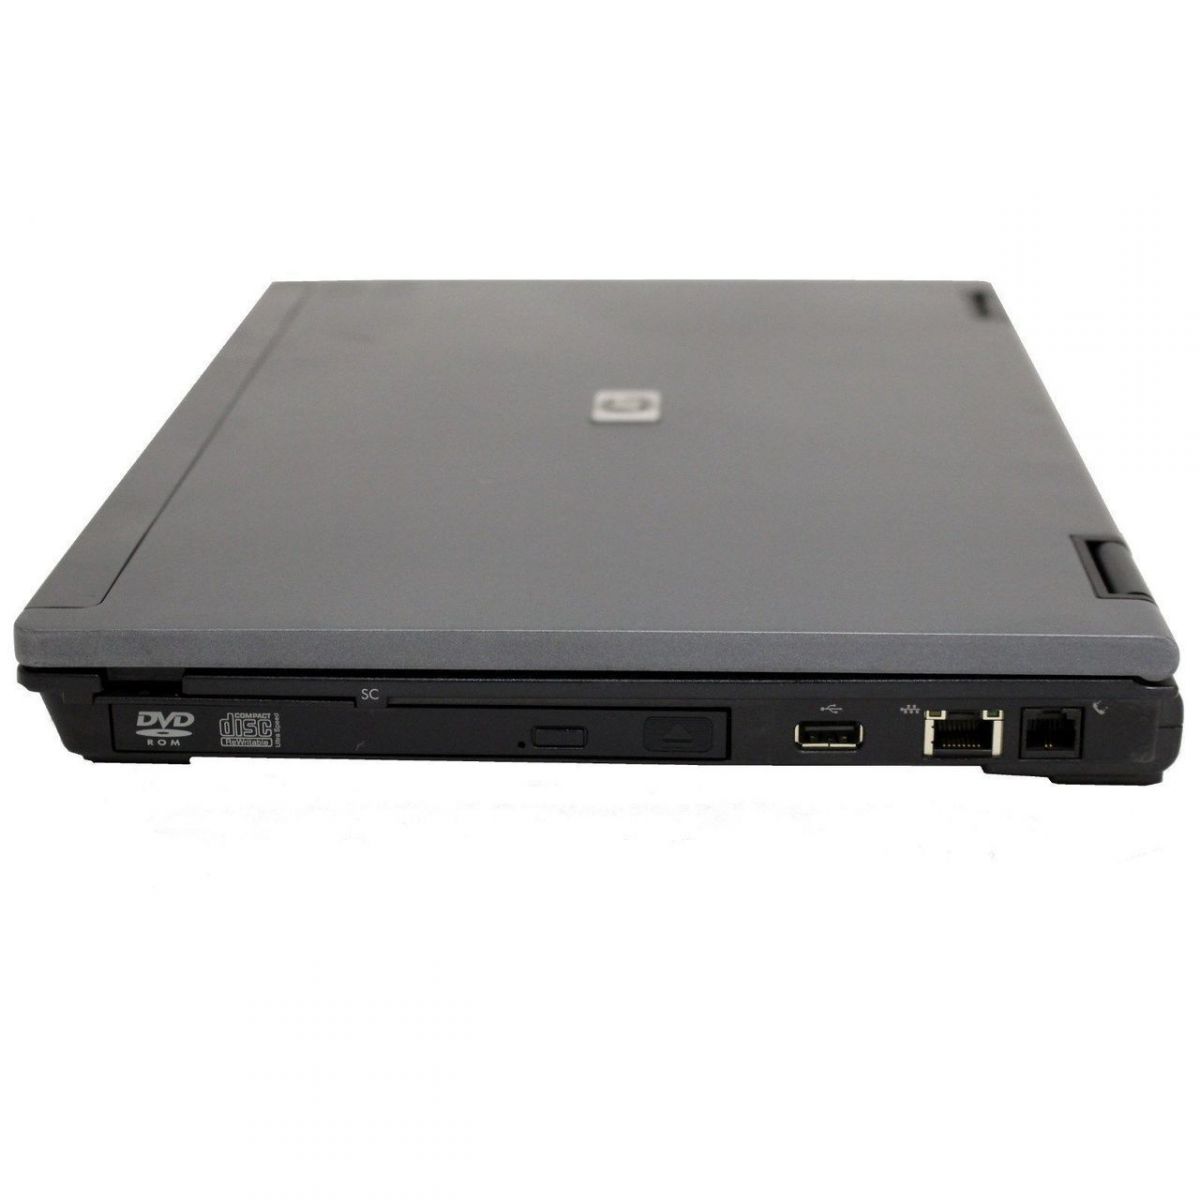 Hp compaq nc6400(Intel Core2Duo T5500/1.66 GHz/4GB/160GB HDD/Intel Graphics Media Accelerator/14,1')